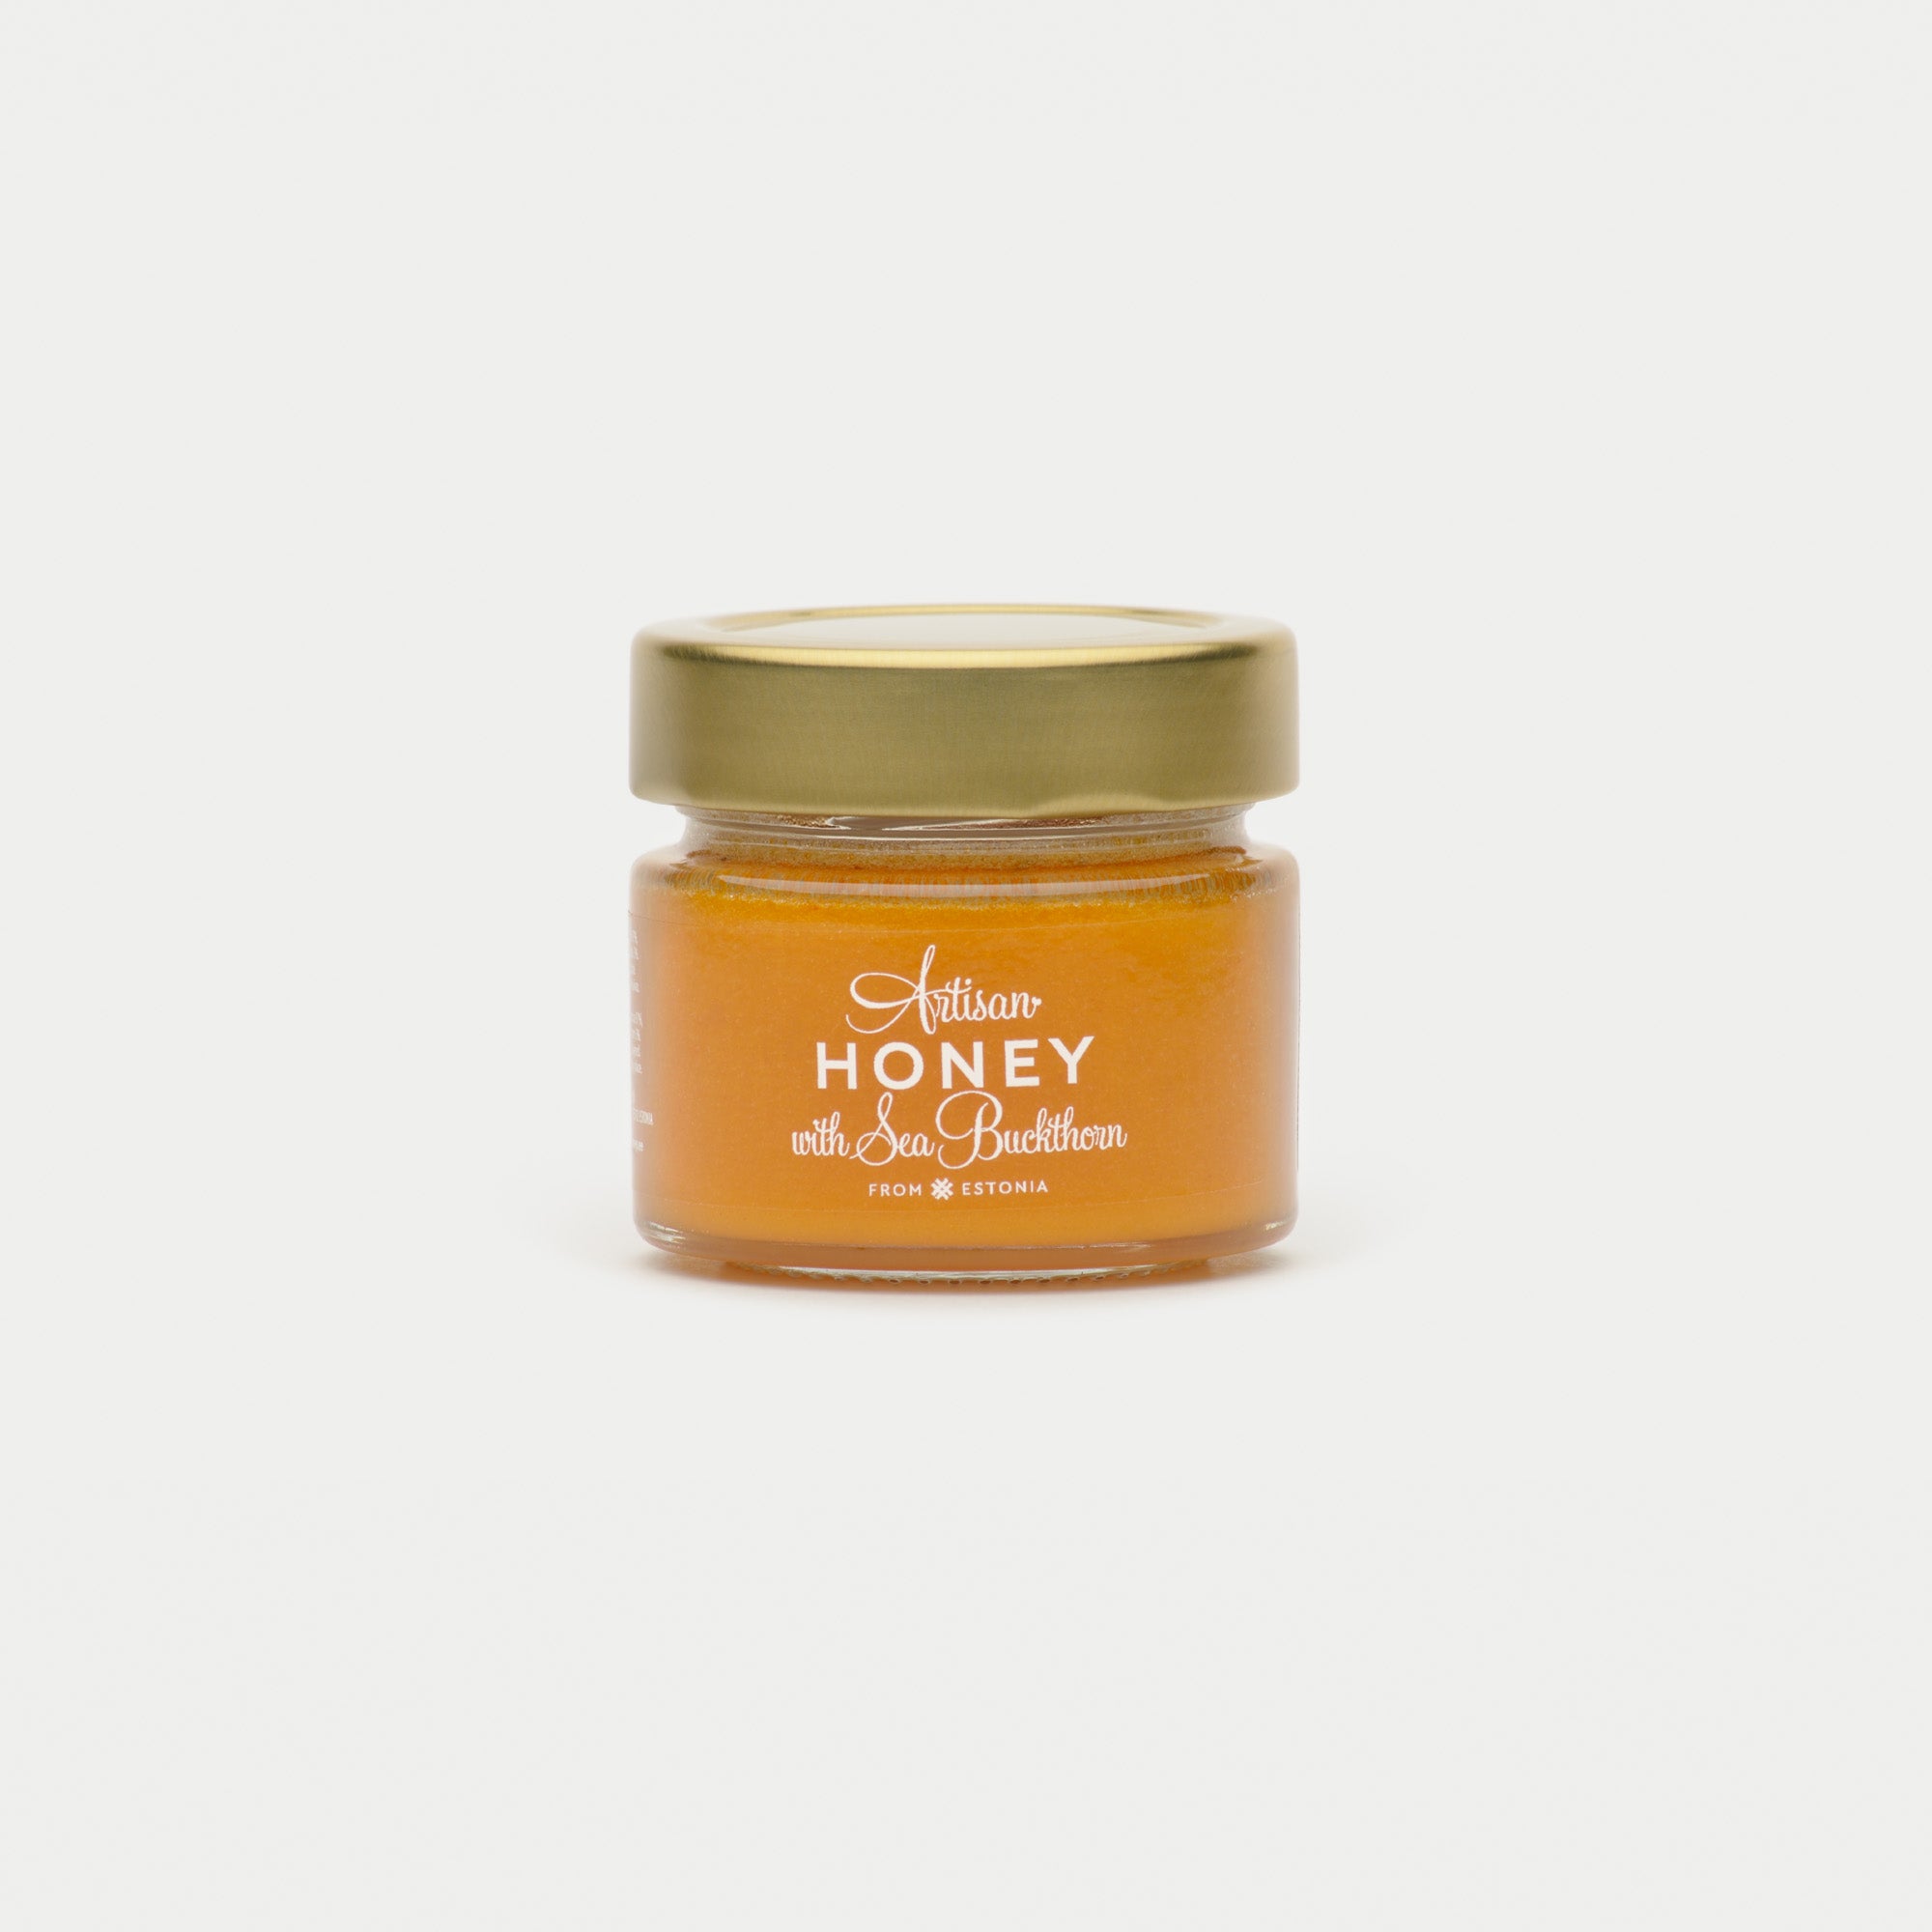 Honey with Sea Buckthorn (100g)